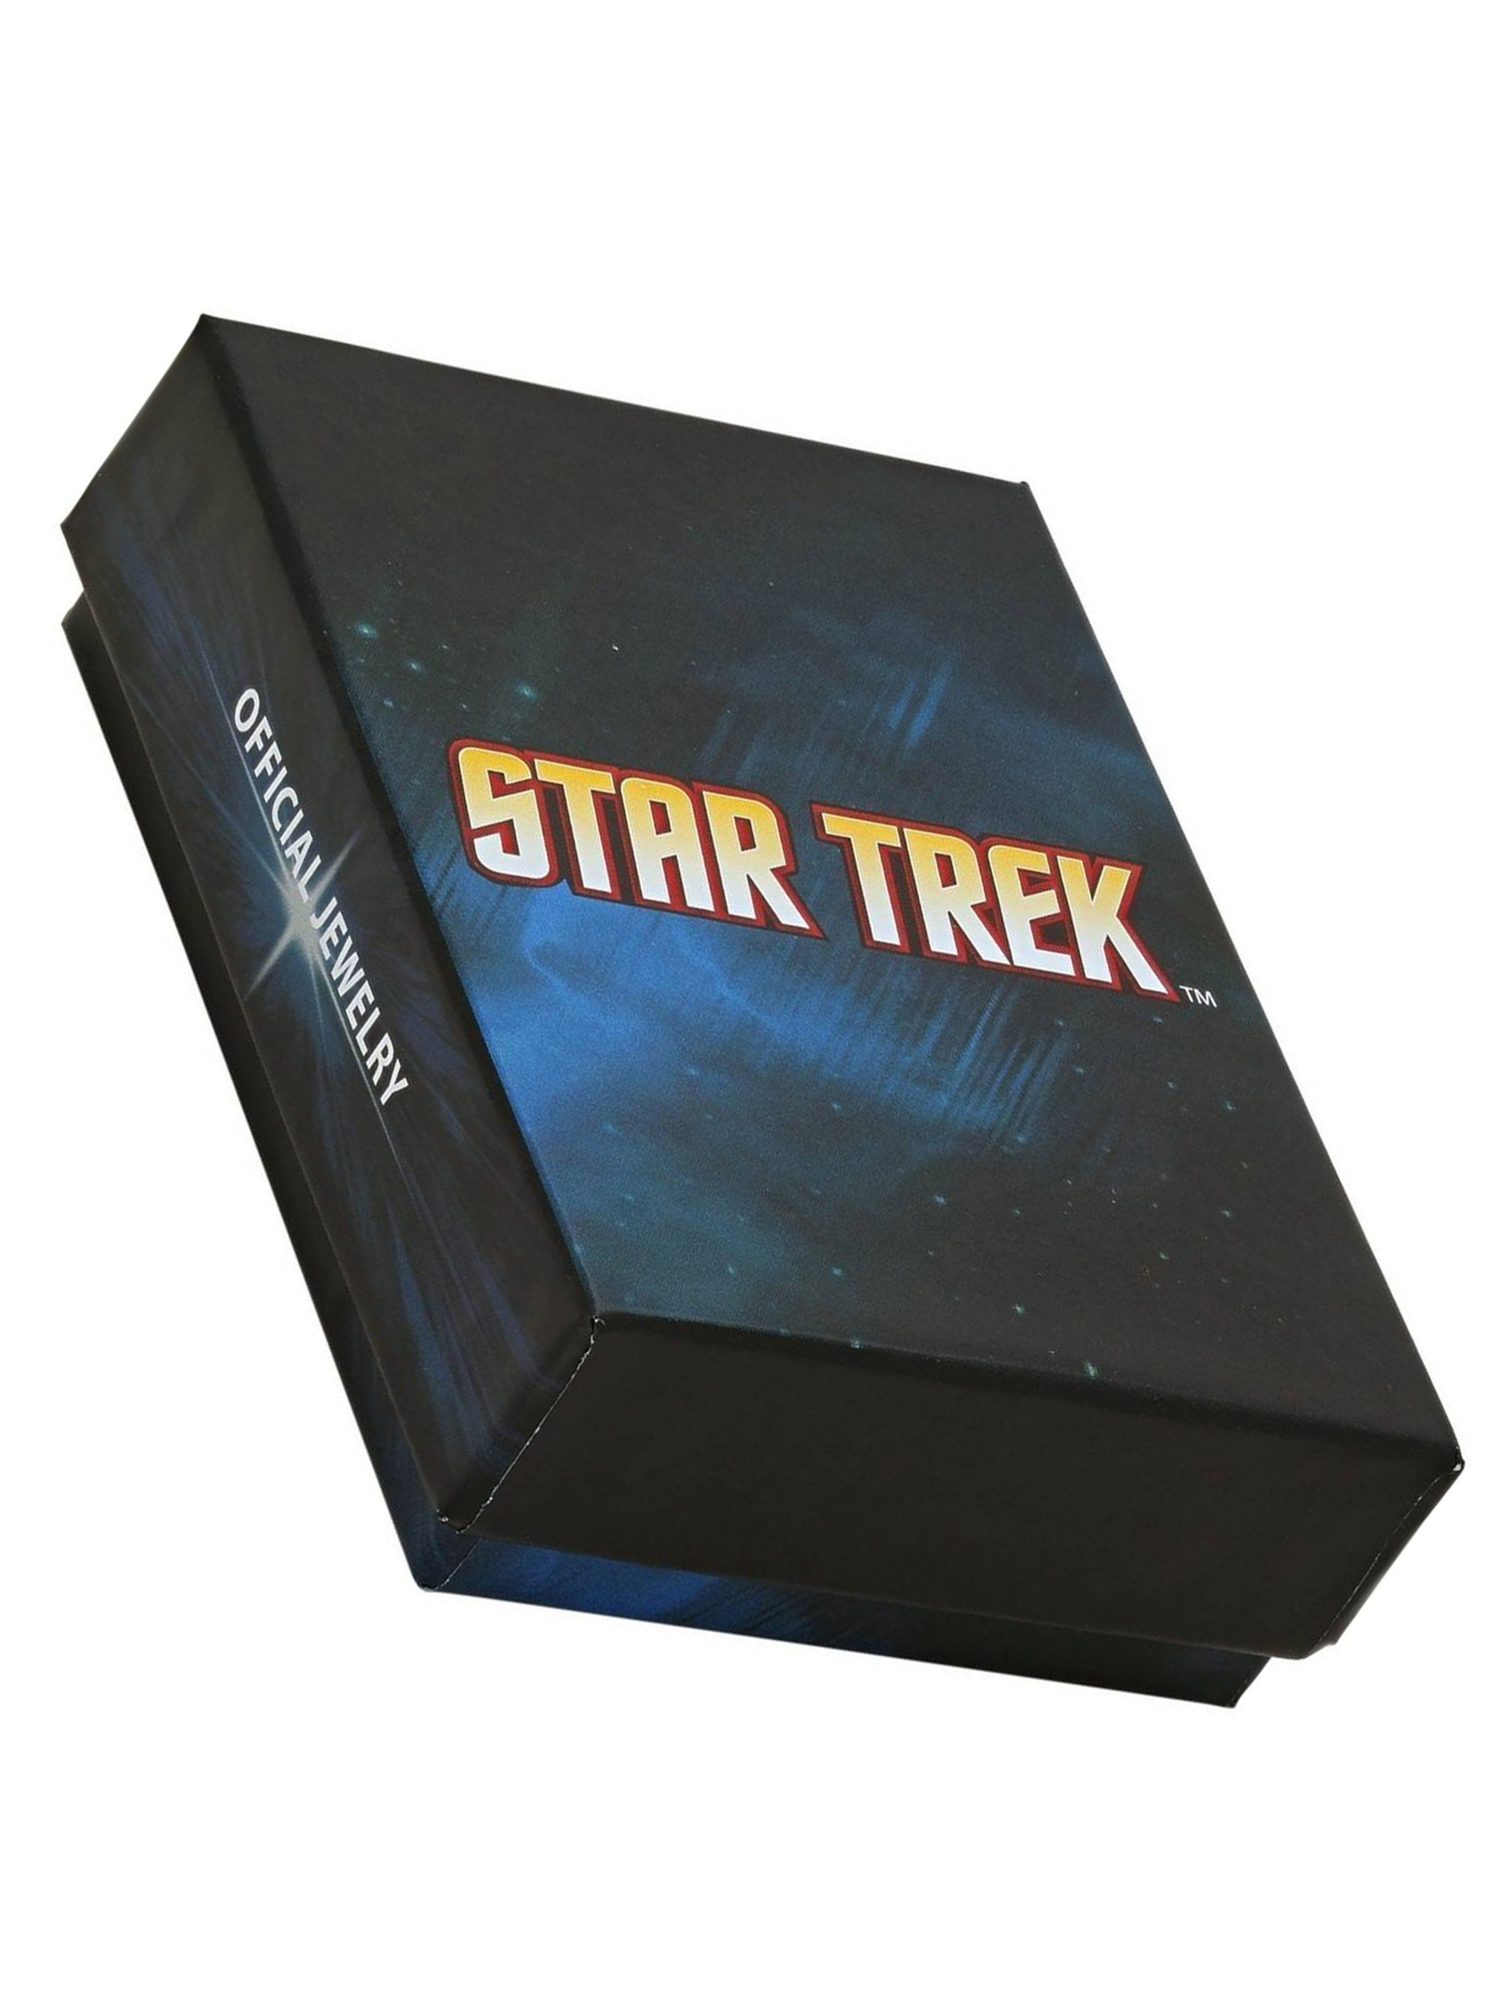 Star Trek Starfleet Insignia Stainless Steel Pendant Necklace - image 4 of 4